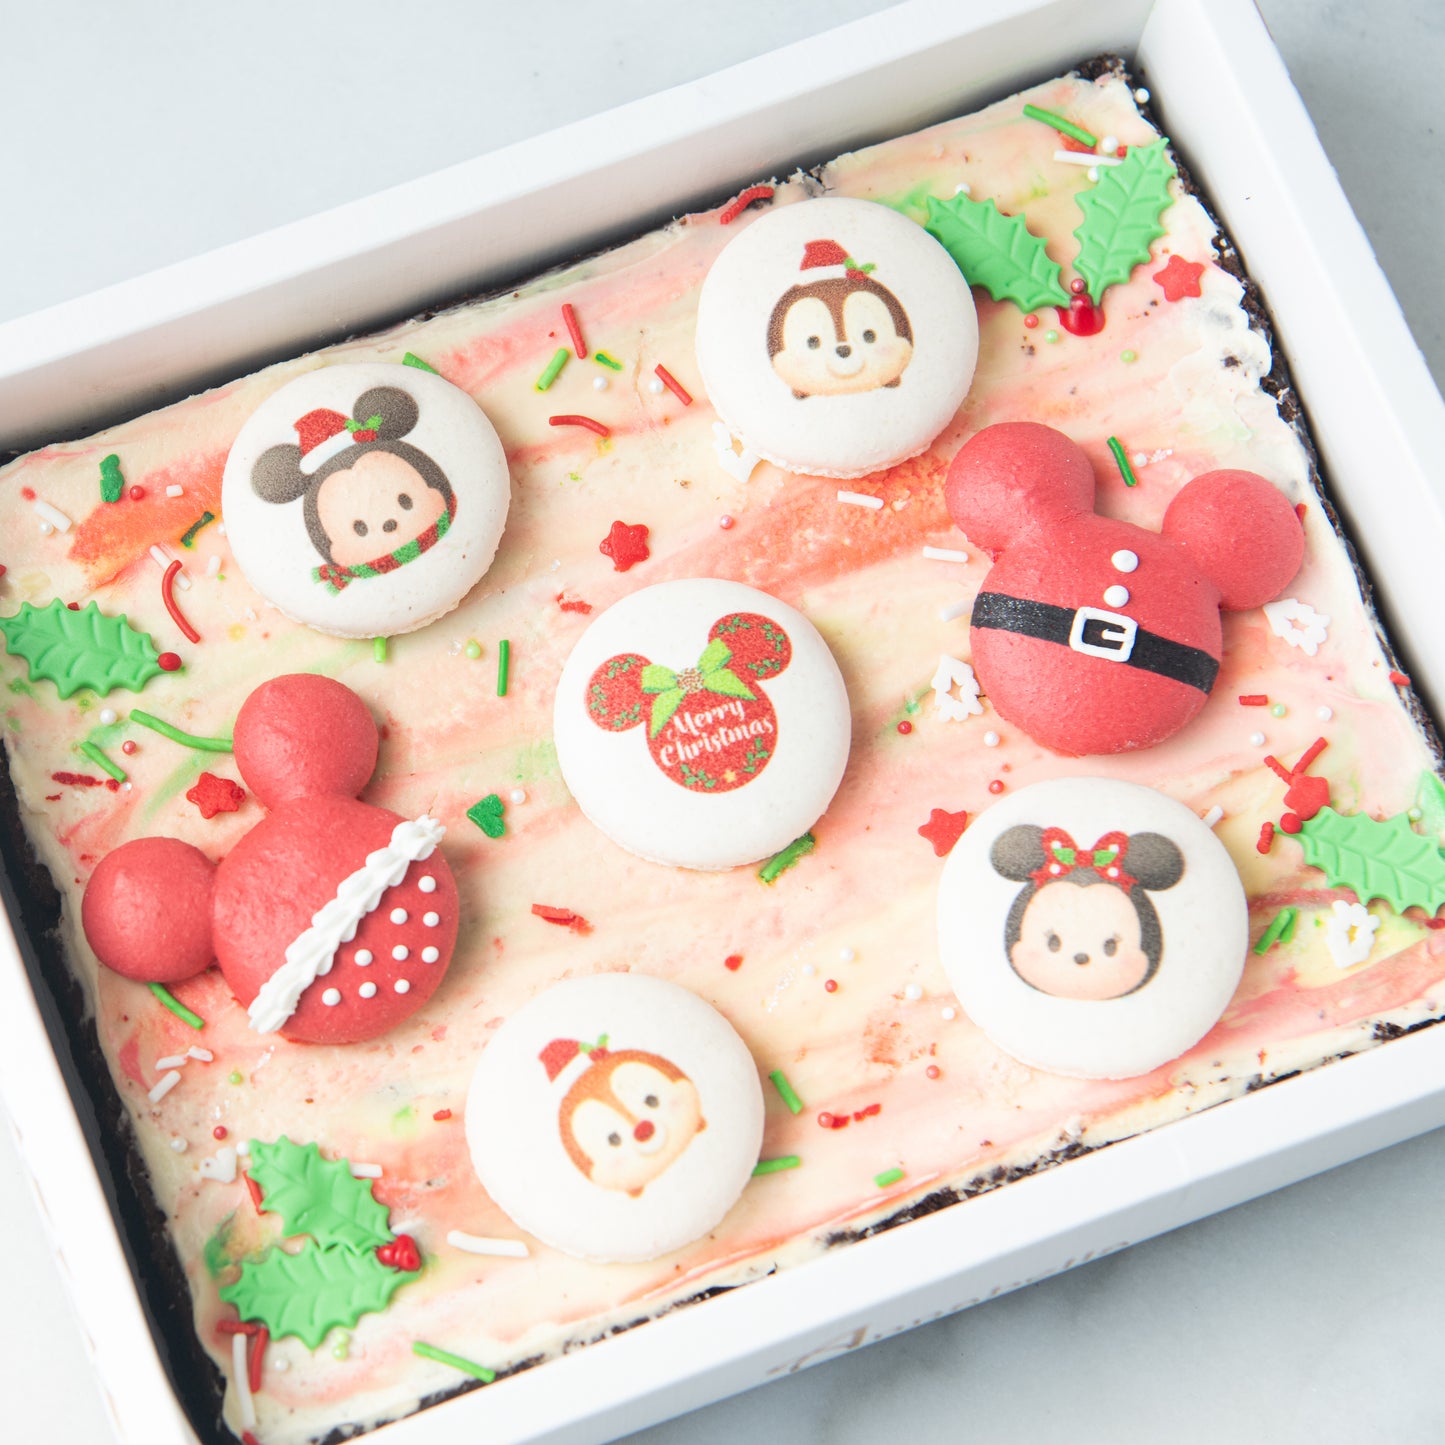 Ho ho ho! | Merry Christmas | Disney Christmas Macaron Brownie | $45.80 Nett